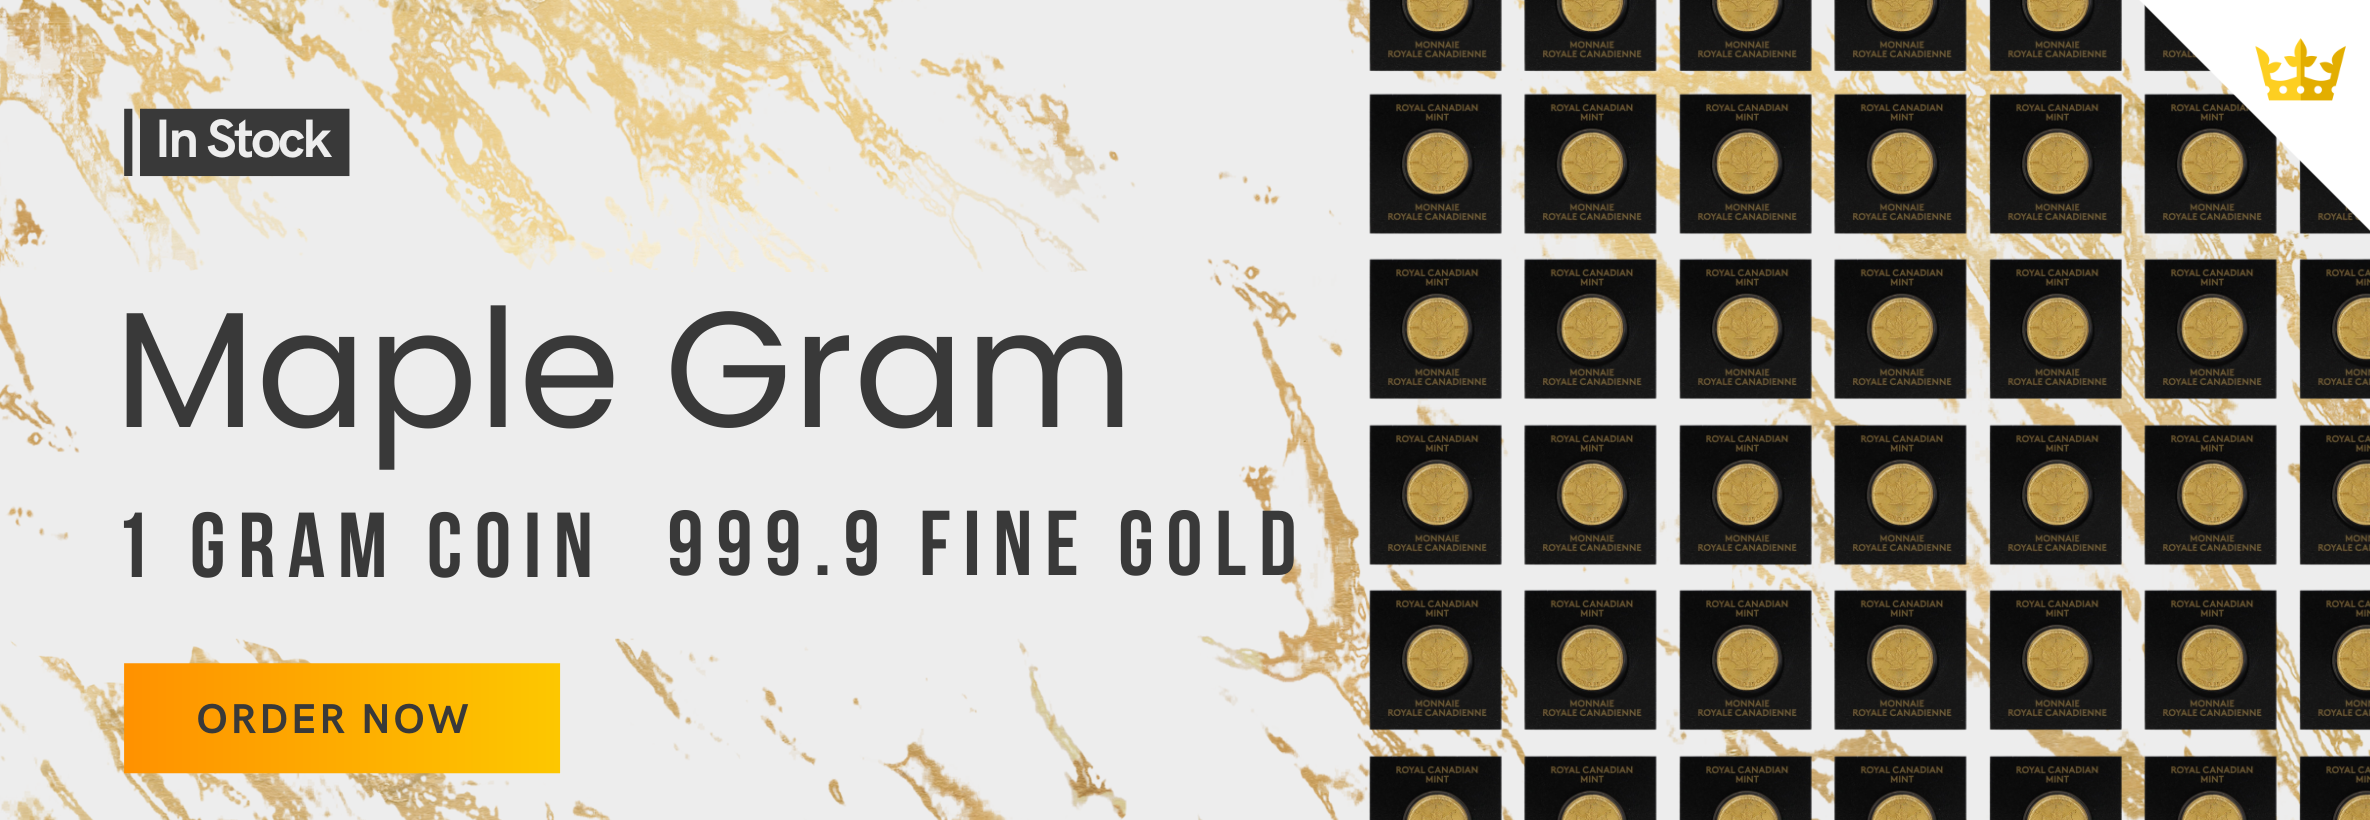 1 g Gold Coin Maple Gram